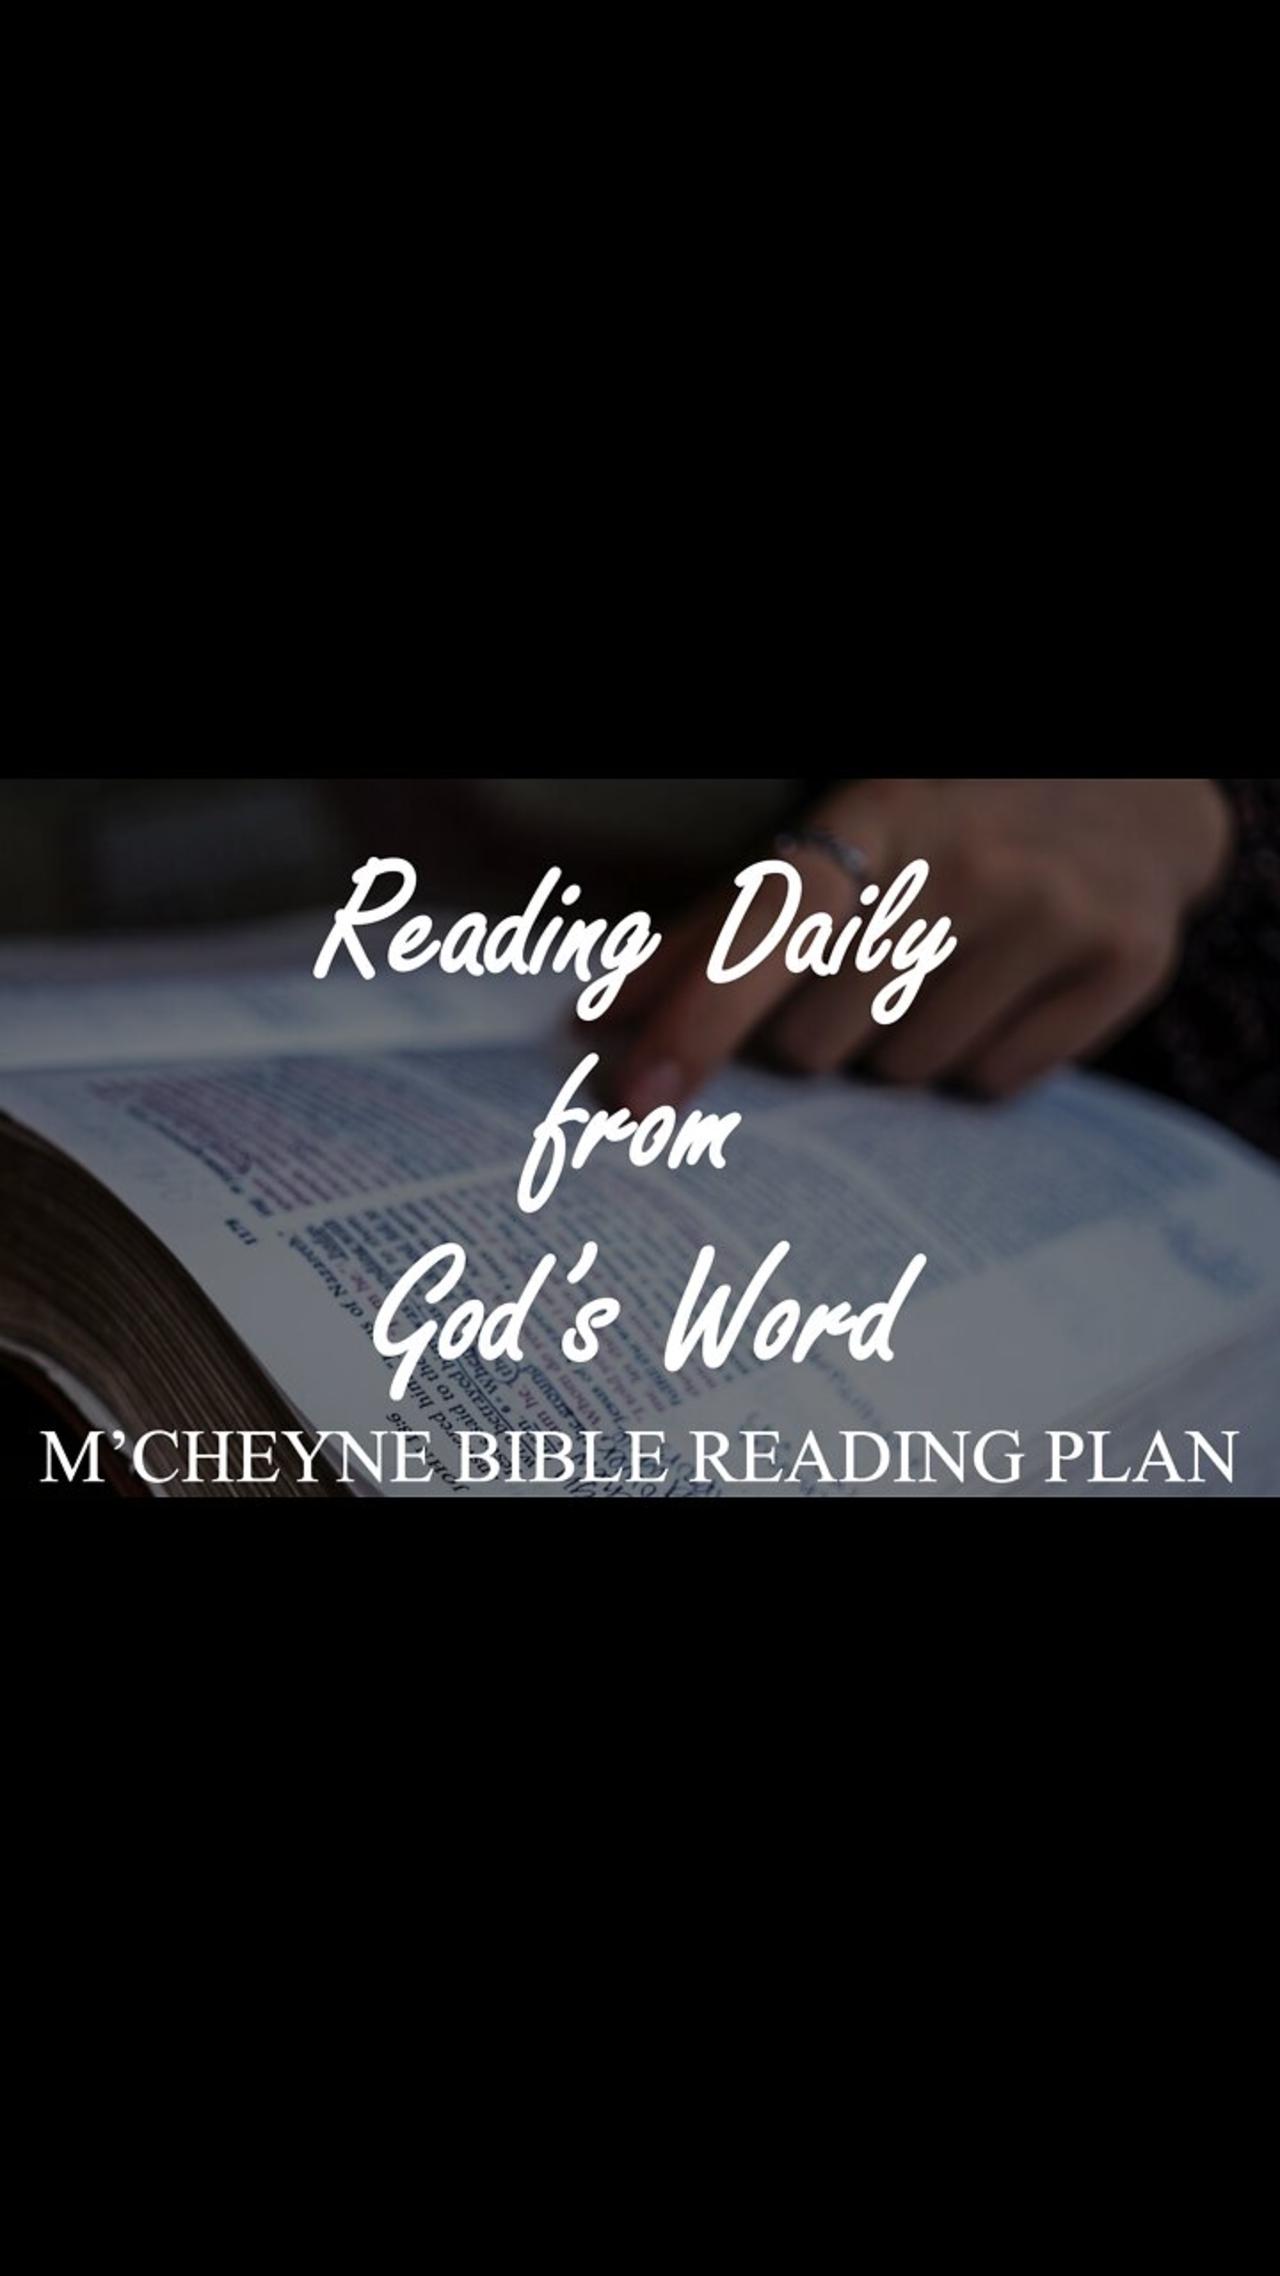 M’CHEYNE BIBLE READING PLAN - August 25